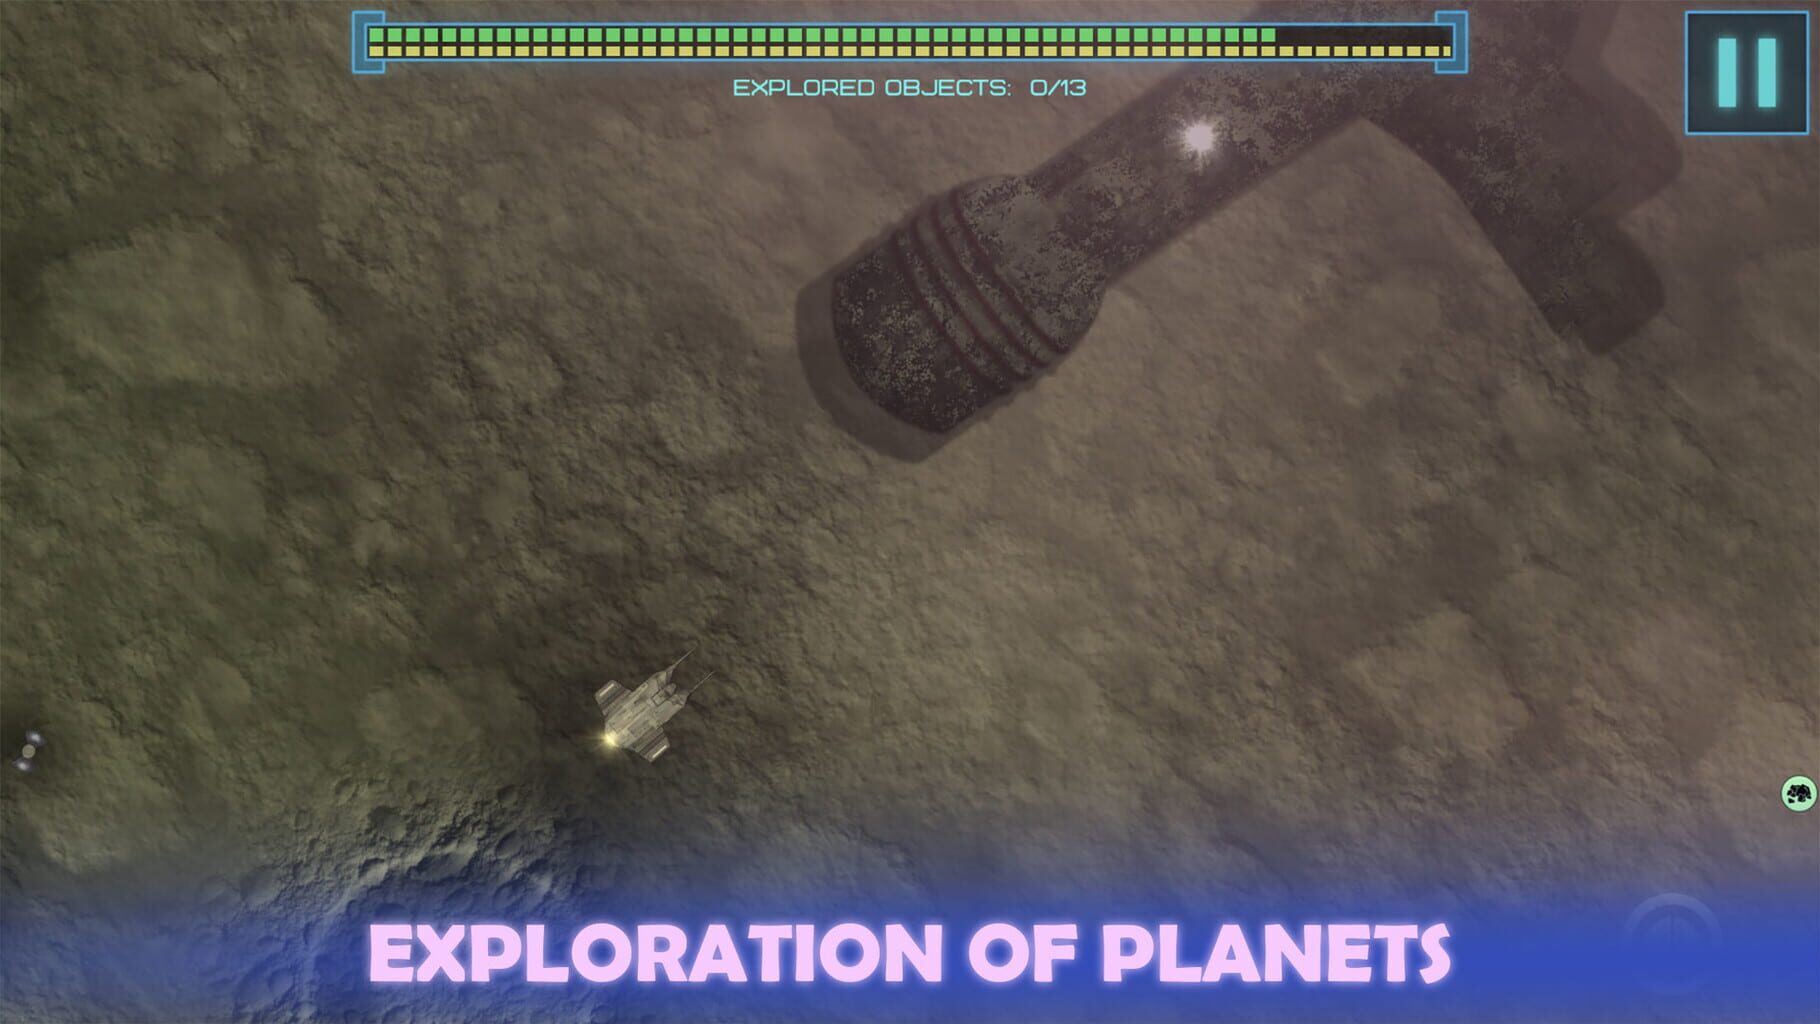 Event Horizon screenshot